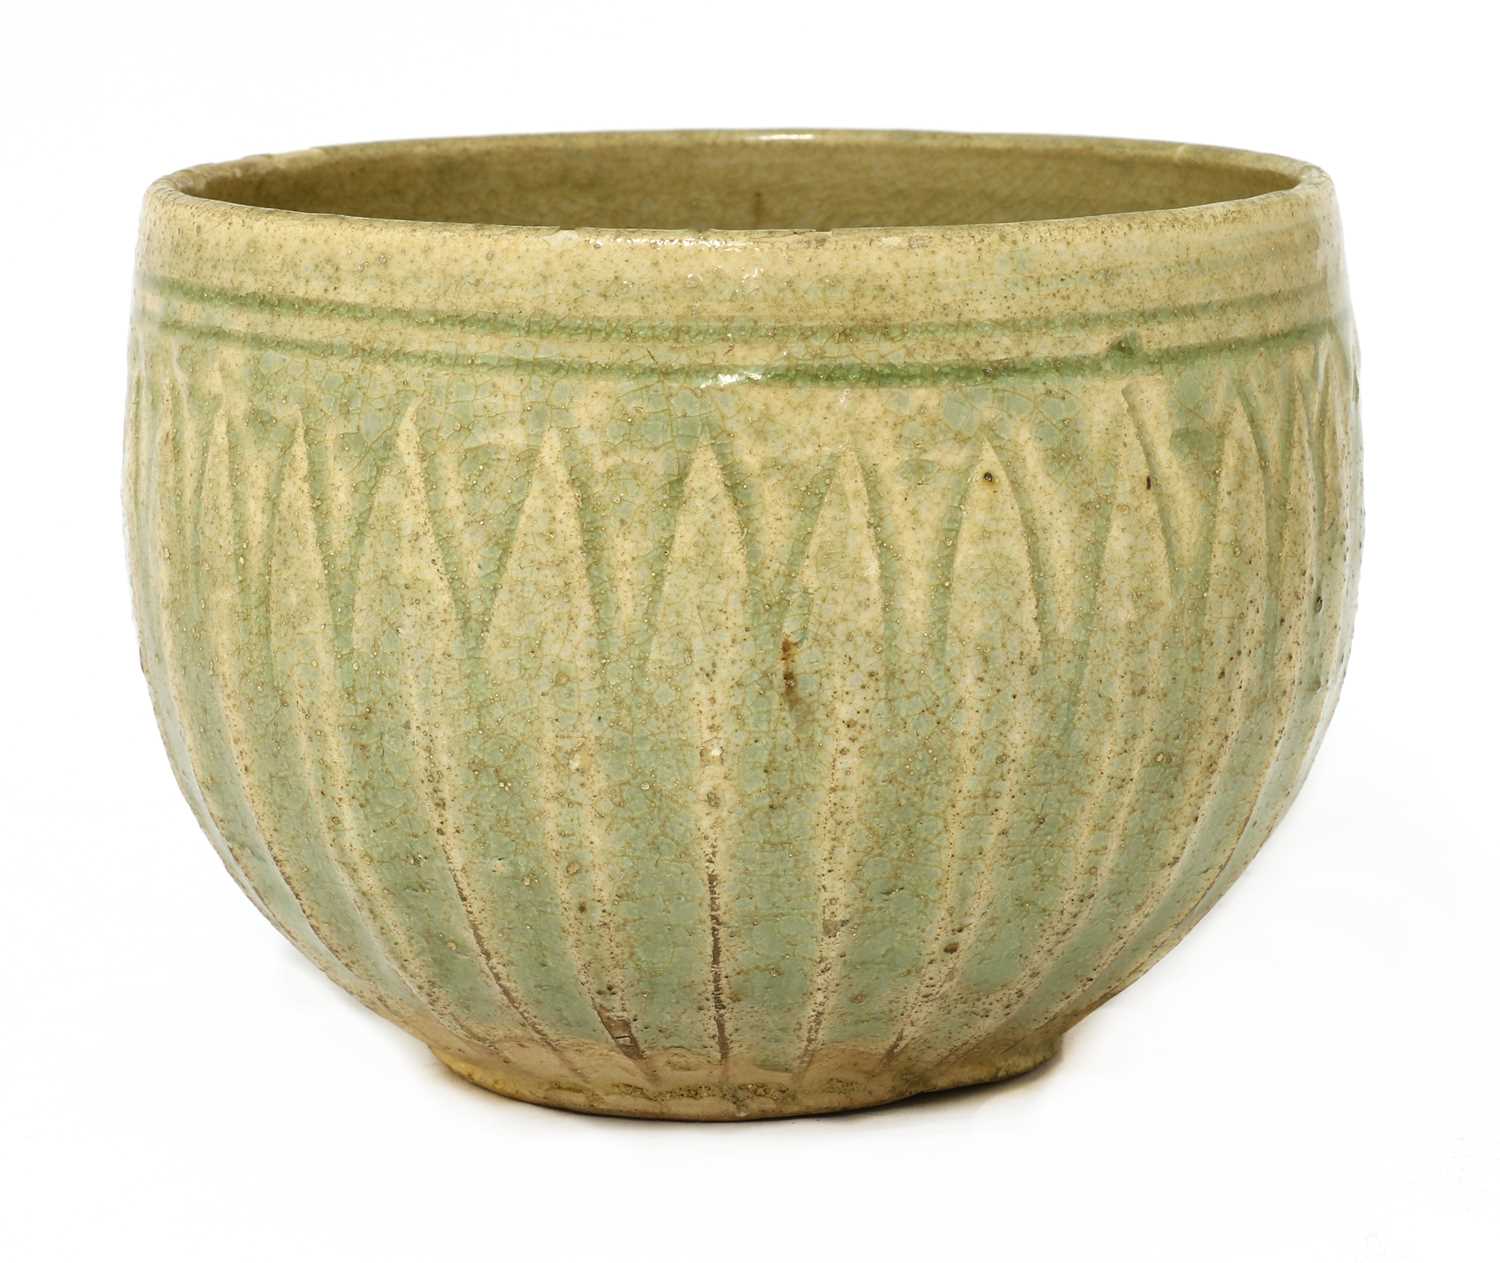 Lot 5 - A Chinese celadon-glazed bowl